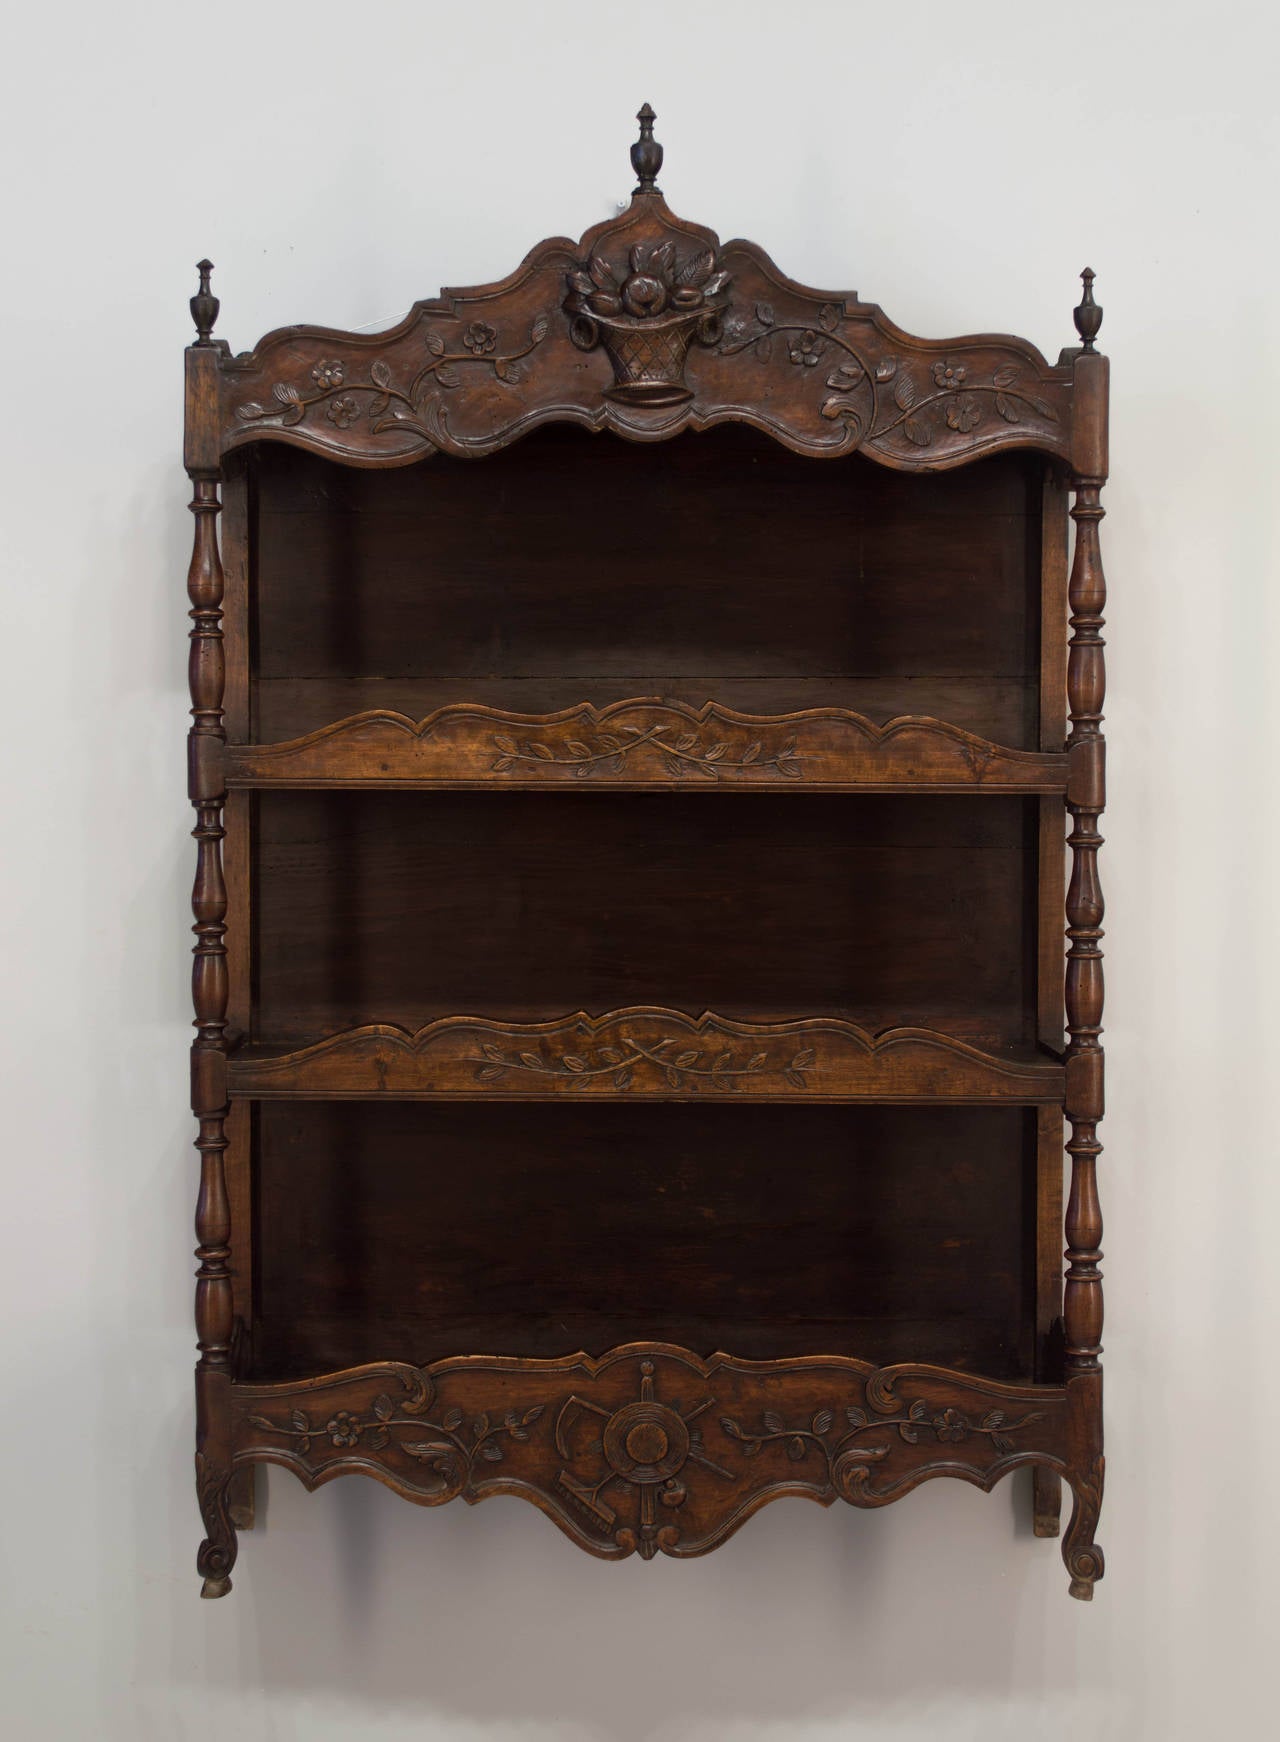 19th c. French Provencal Shelf or Estganier made of walnut, having three shelves for display (8.75